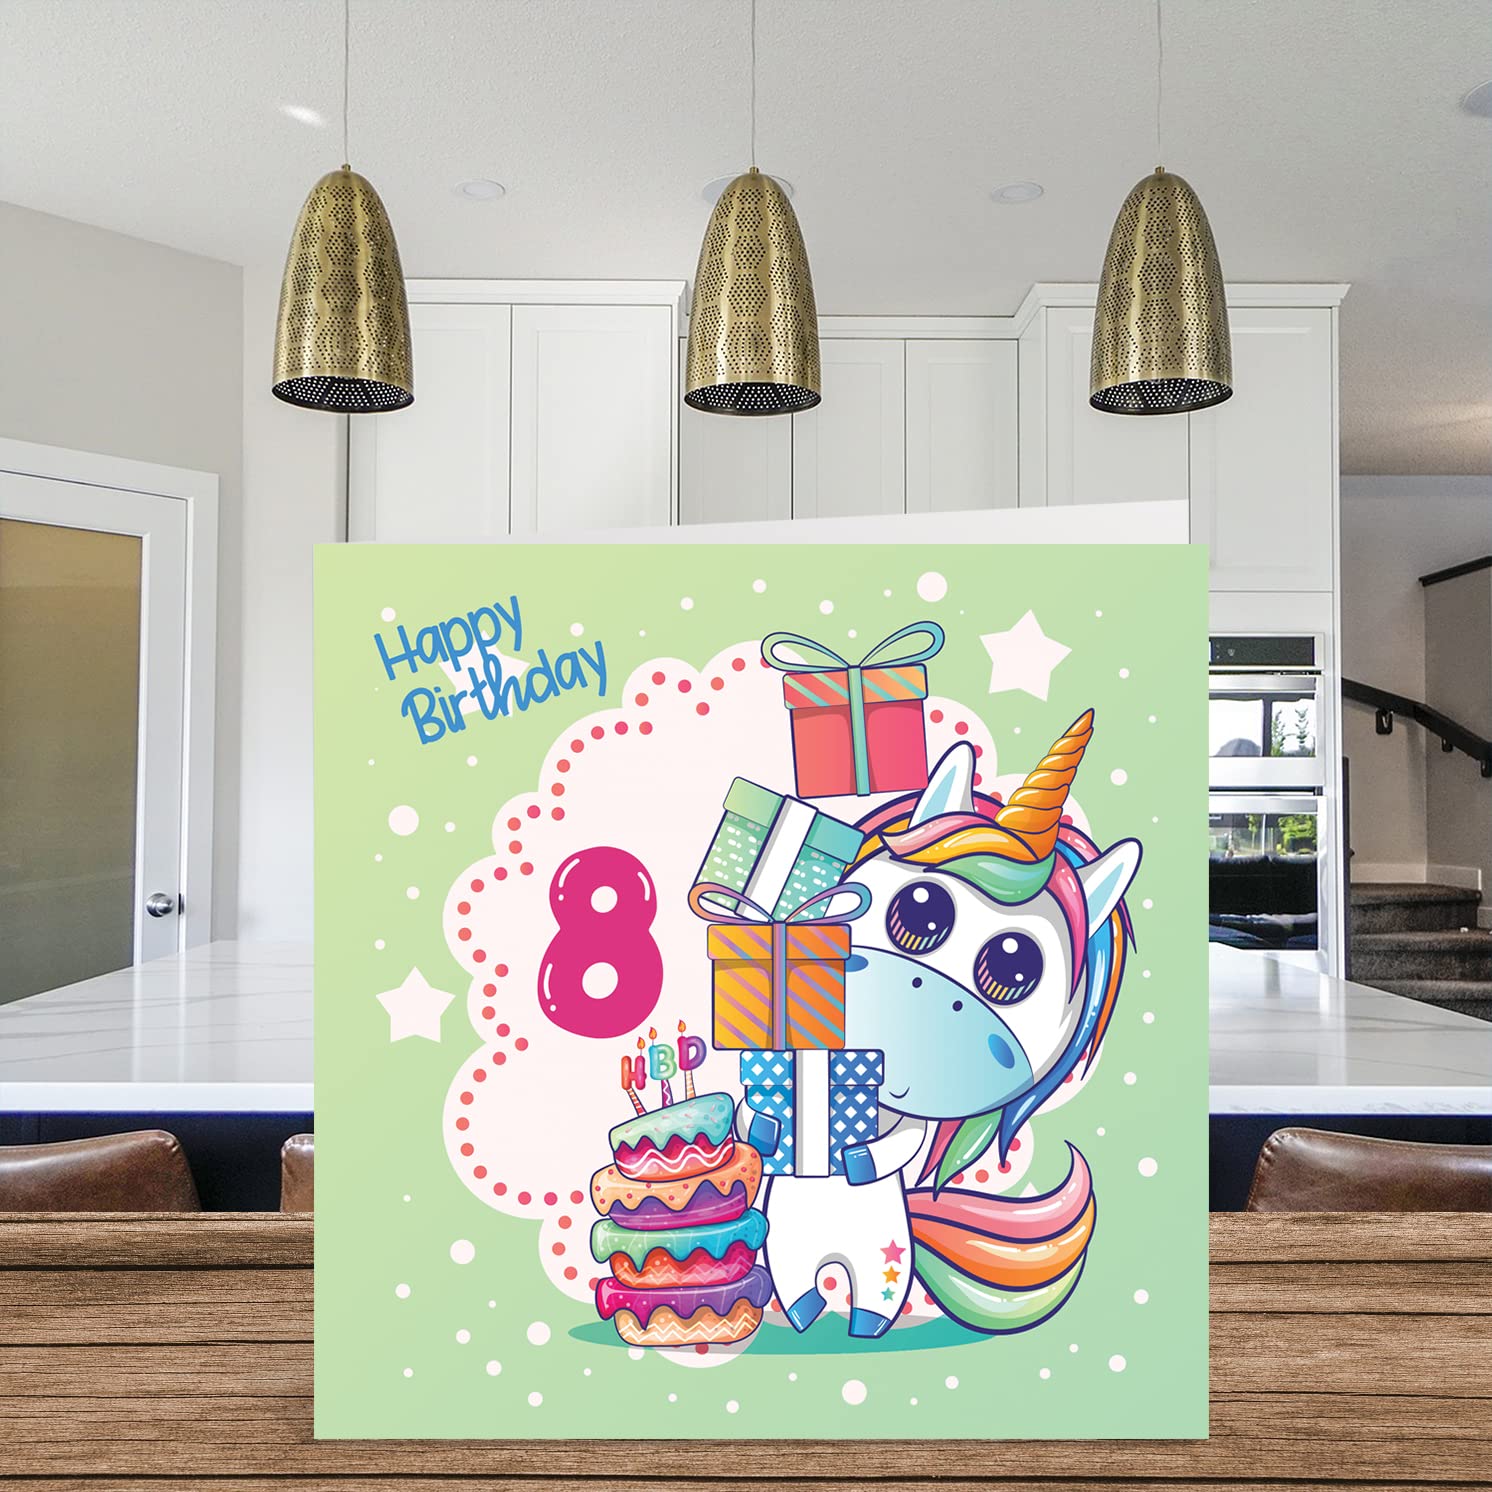 8th Birthday Card Girl - Magical Unicorn Birthday Card - Happy Birthday Card 8 Year Old Girl, Girls Birthday Cards for Her, 145mm x 145mm Greeting Cards for Daughter Niece Granddaughter Kids Children